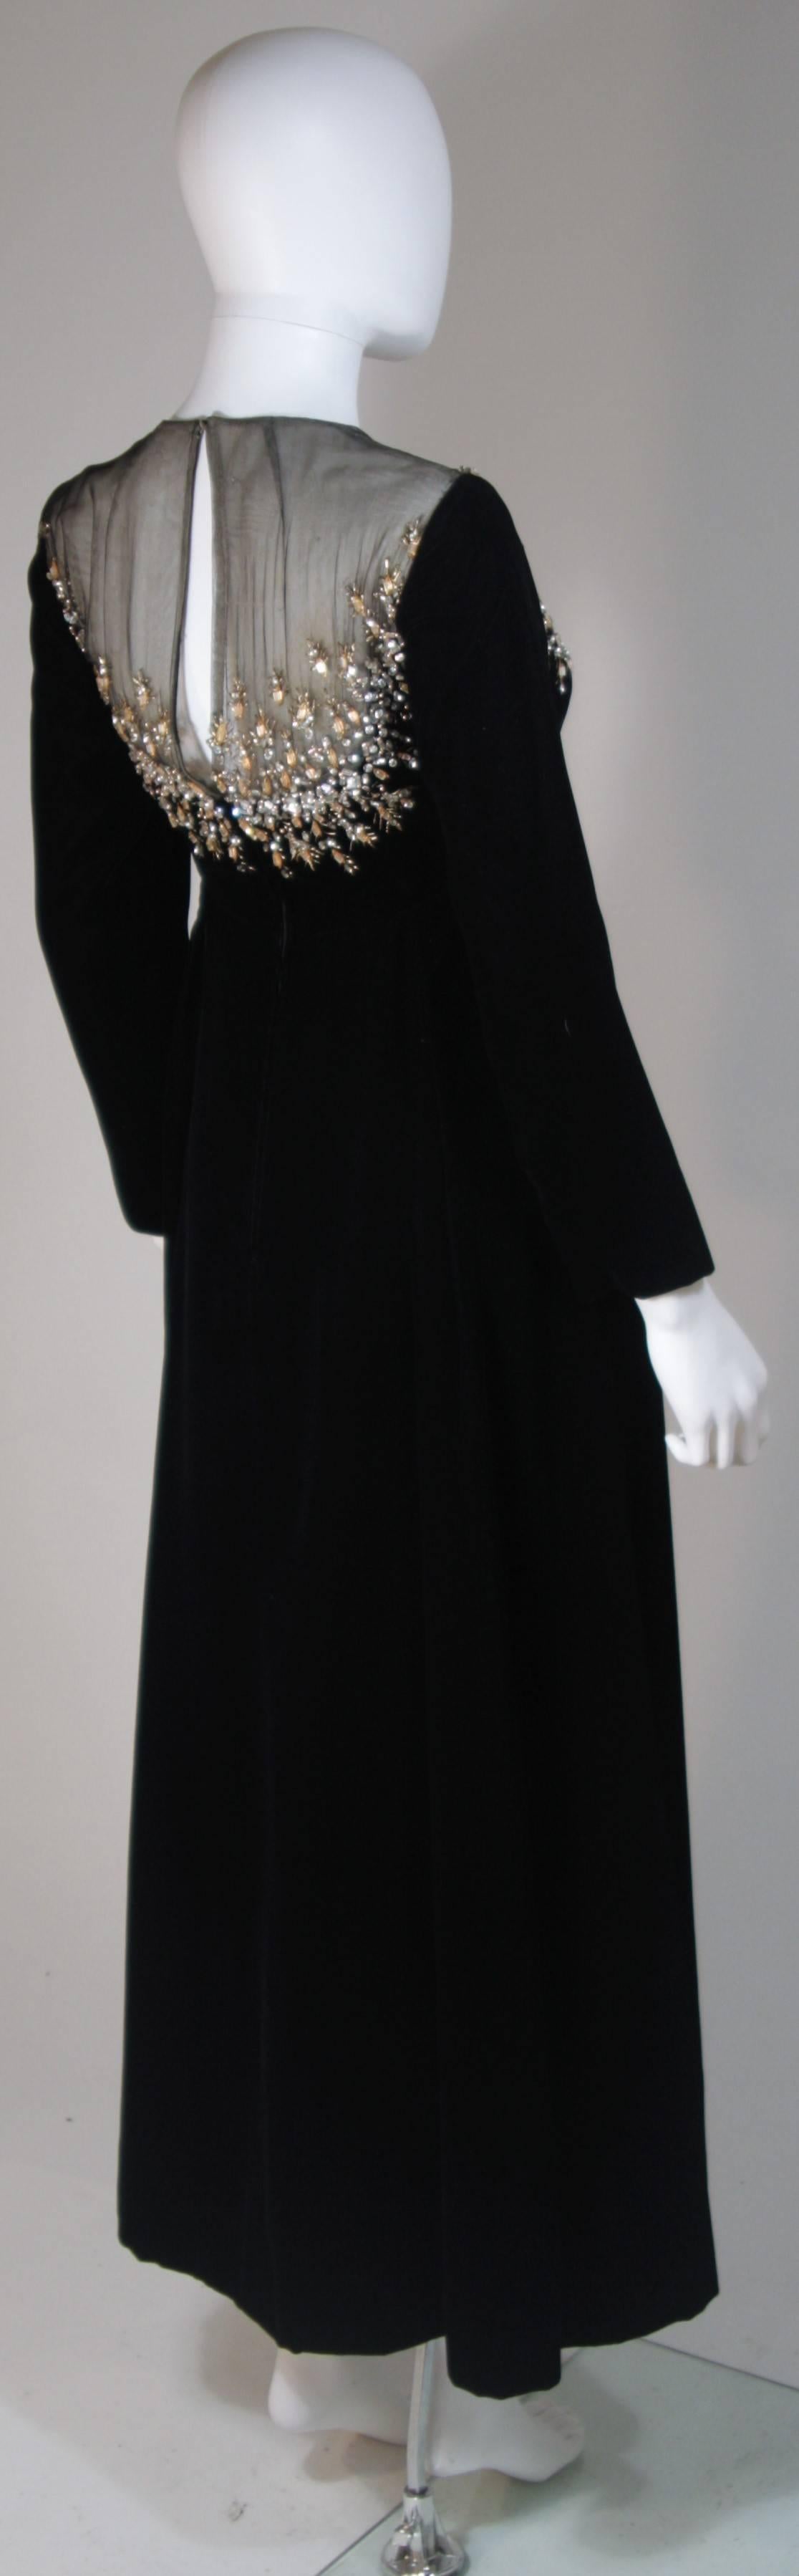 MALCOLM STARR Black Velvet Gown with Sheer Neckline & Rhinestone Applique Size 8 3